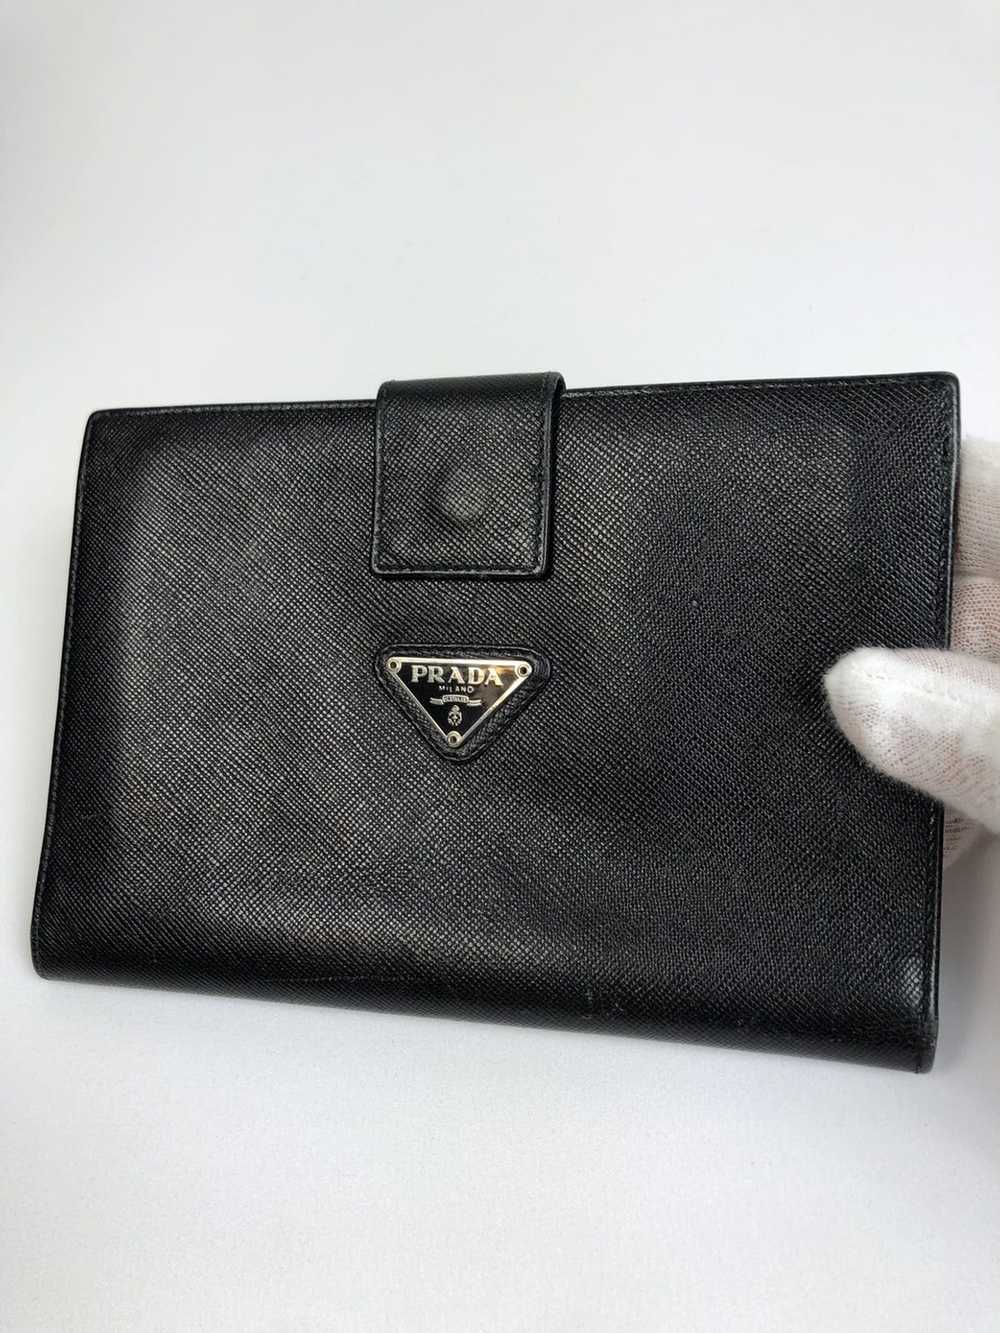 Prada Prada tessuto nero leather long wallet - image 1